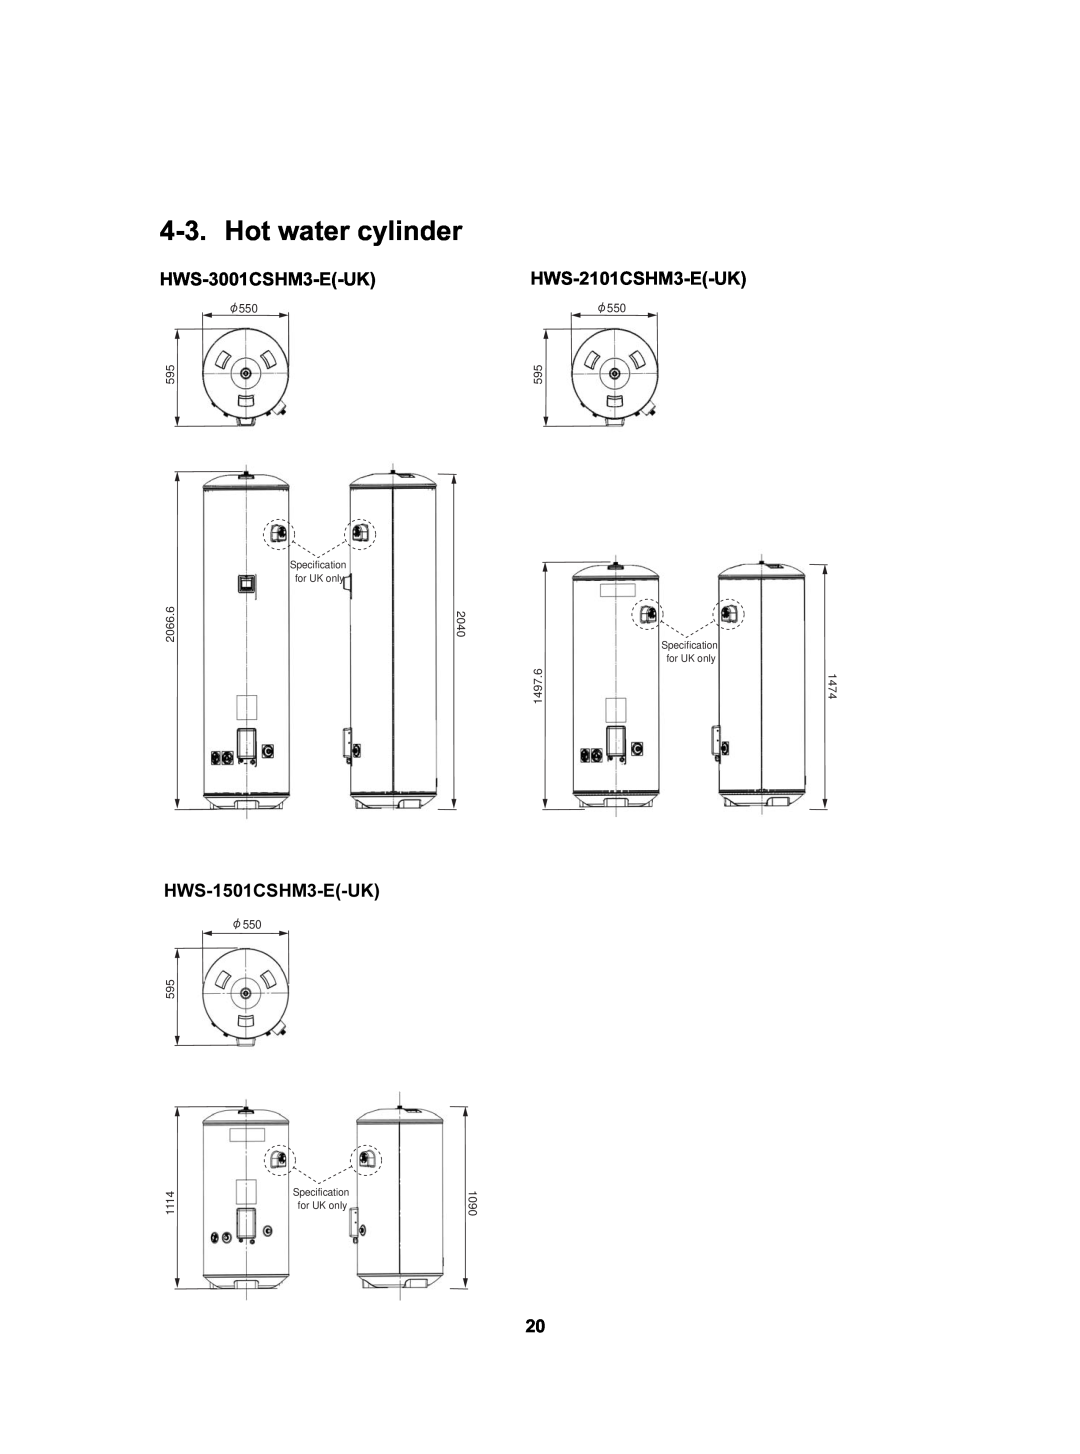 Toshiba HWS-802H-E, HWS-802XWHT6-E Hot water cylinder, HWS-3001CSHM3-E-UKHWS-2101CSHM3-E-UK, HWS-1501CSHM3-E-UK 